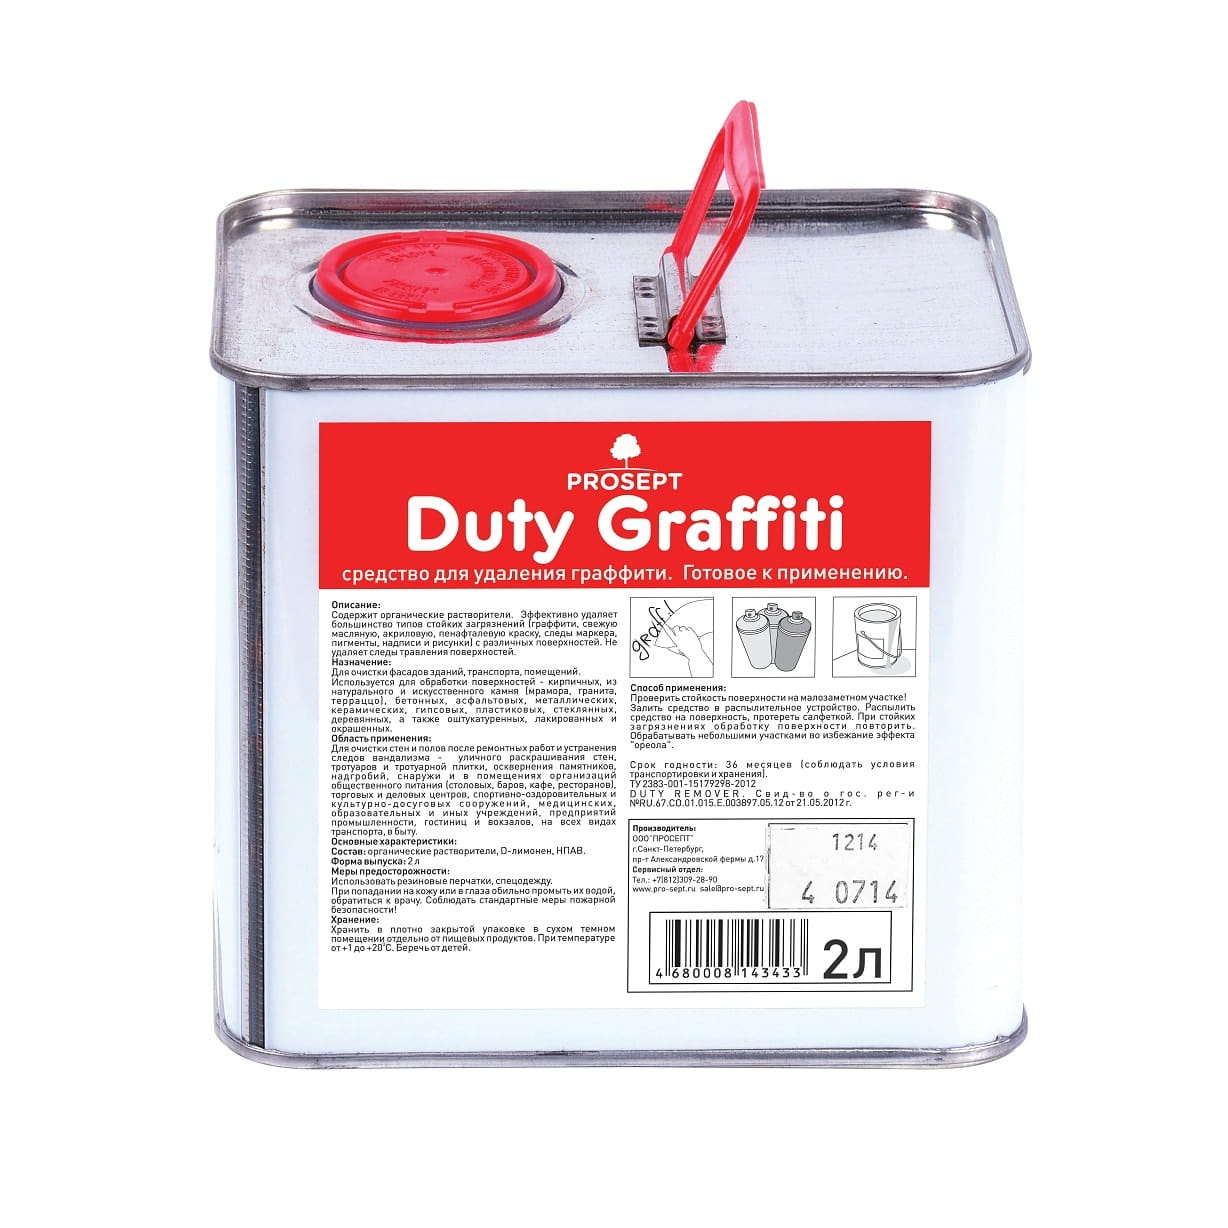 Duty Graffiti. Средство для удаления граффити